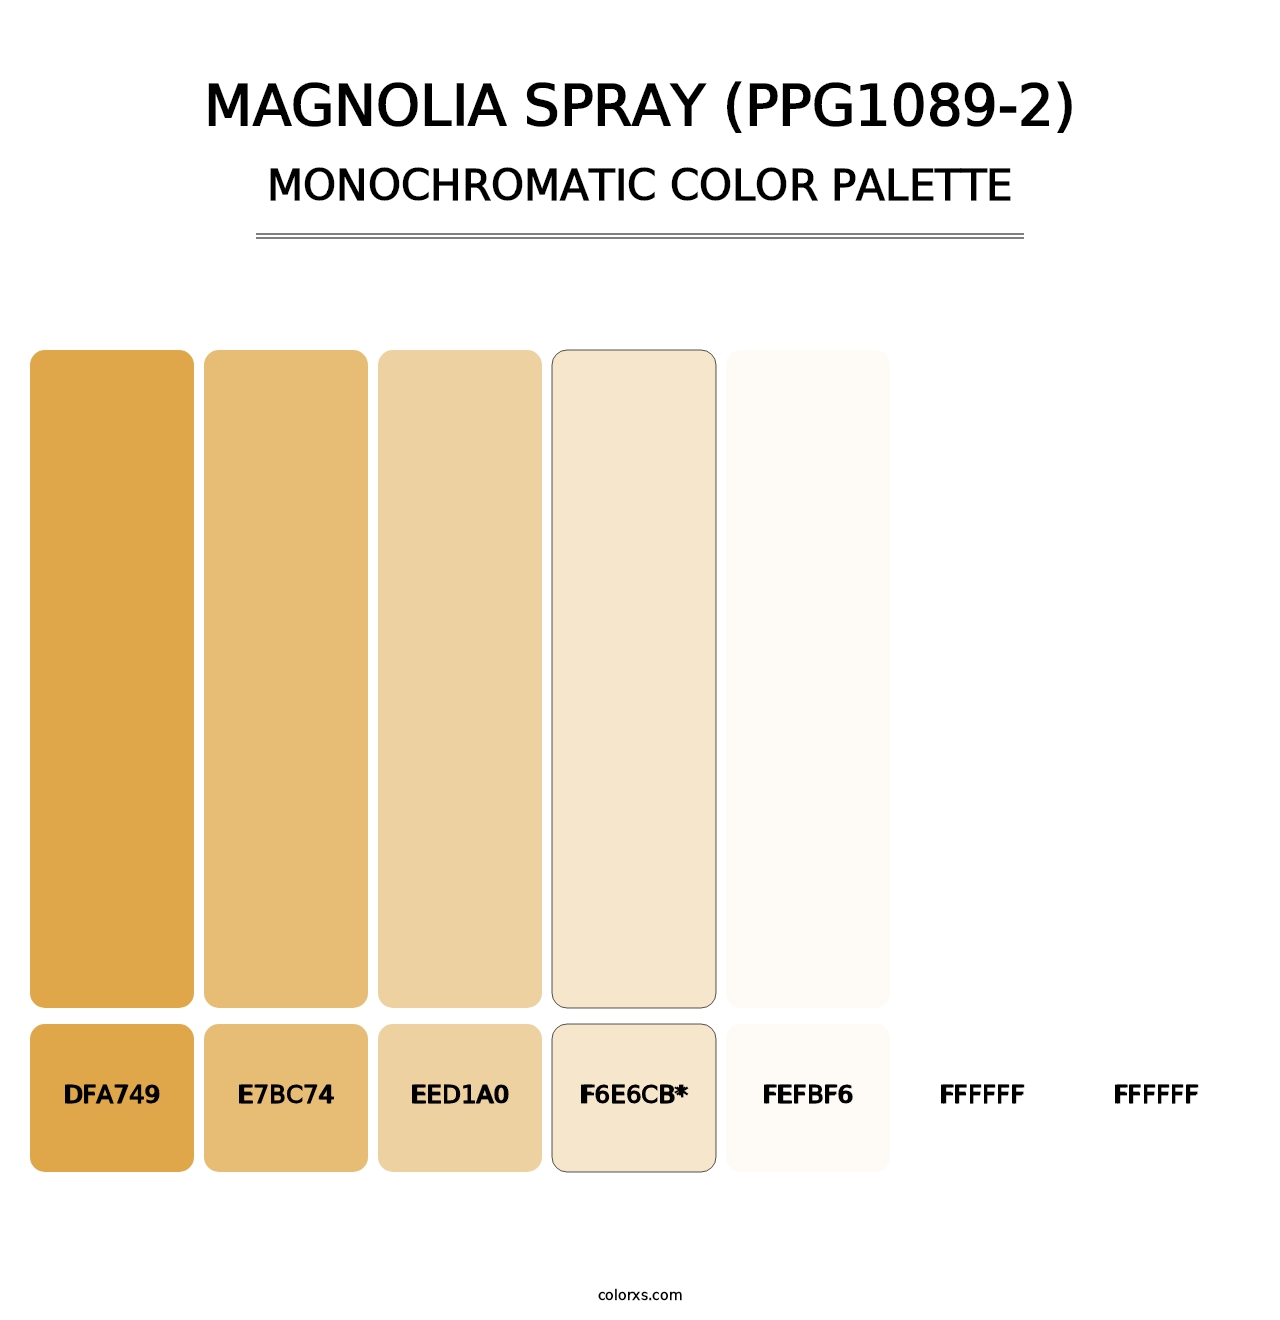 Magnolia Spray (PPG1089-2) - Monochromatic Color Palette